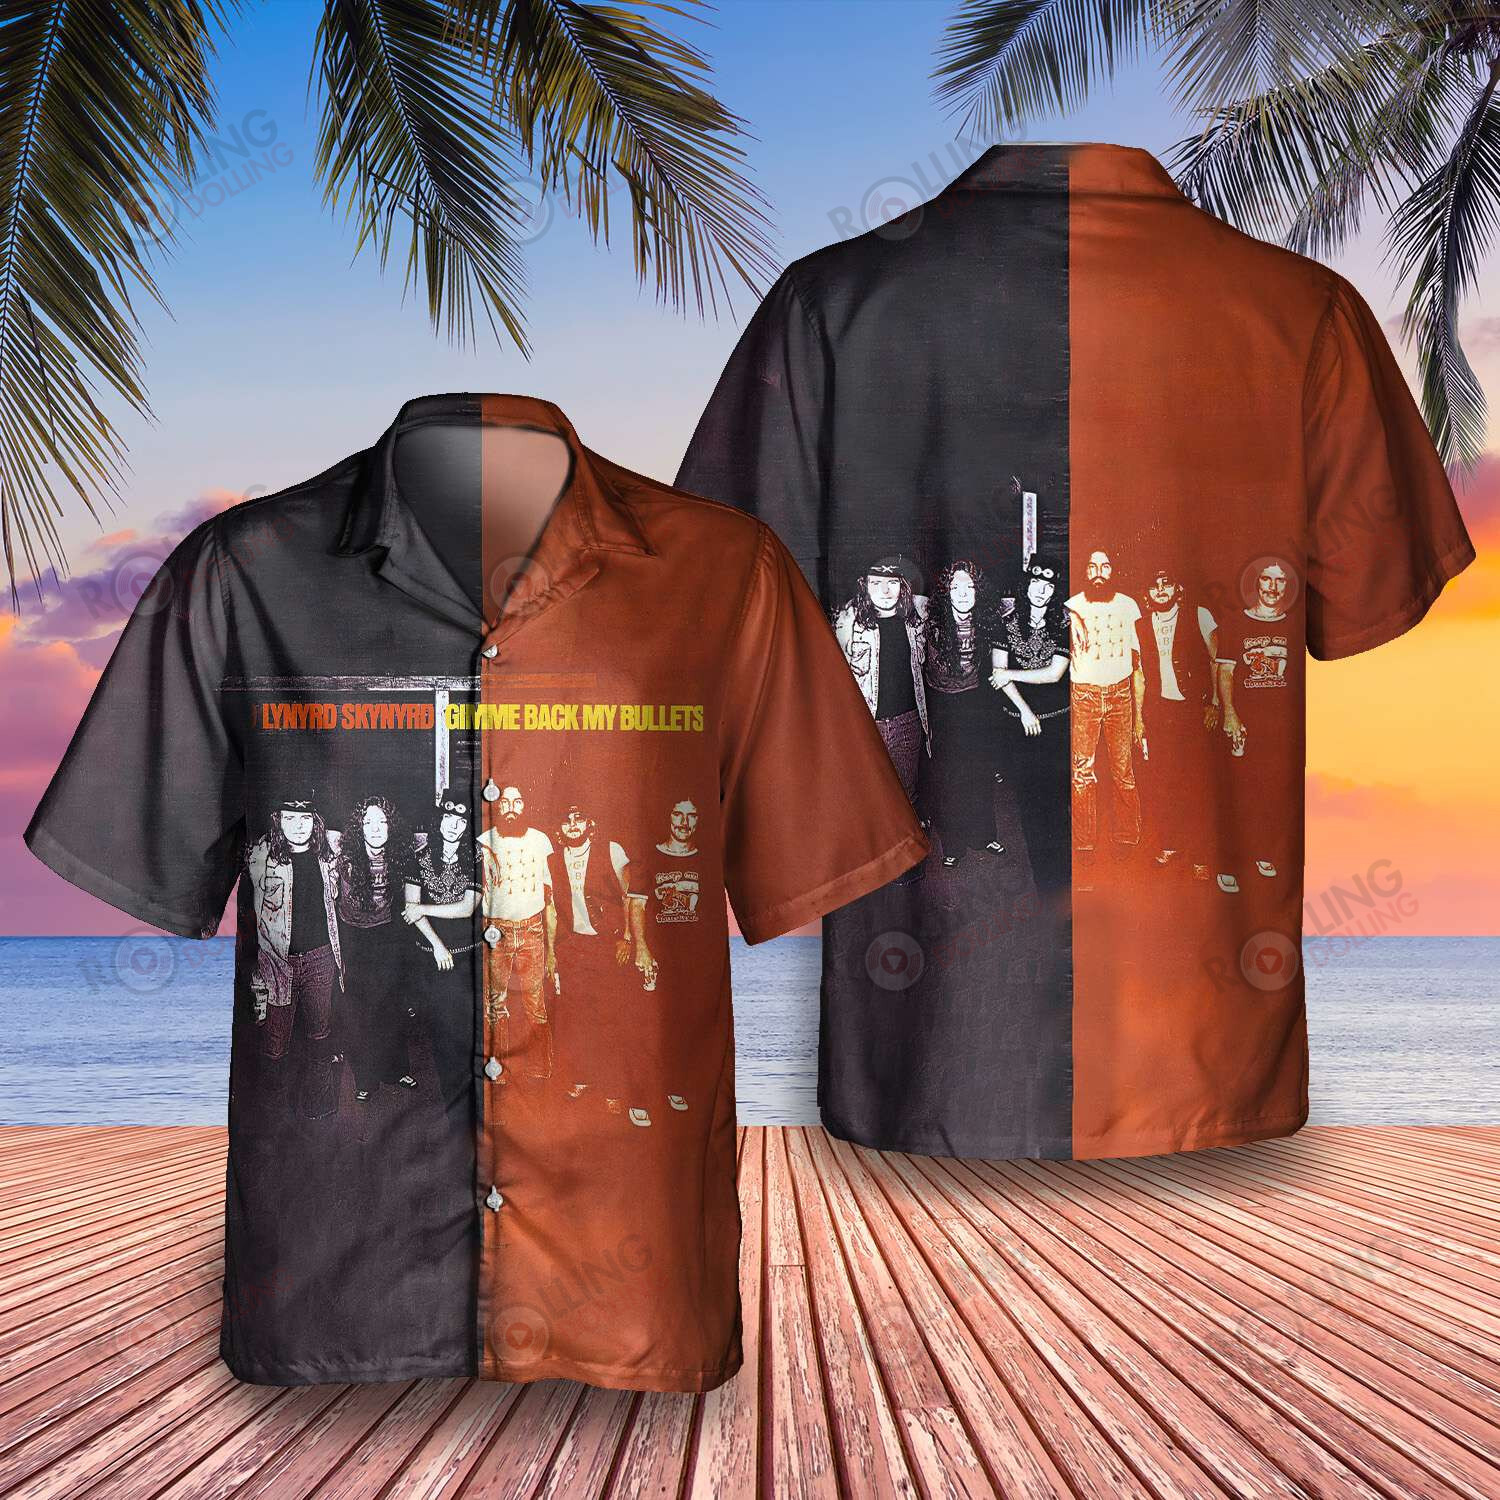 Regardless of their style, you will feel comfortable wearing Hawaiian Shirt 94